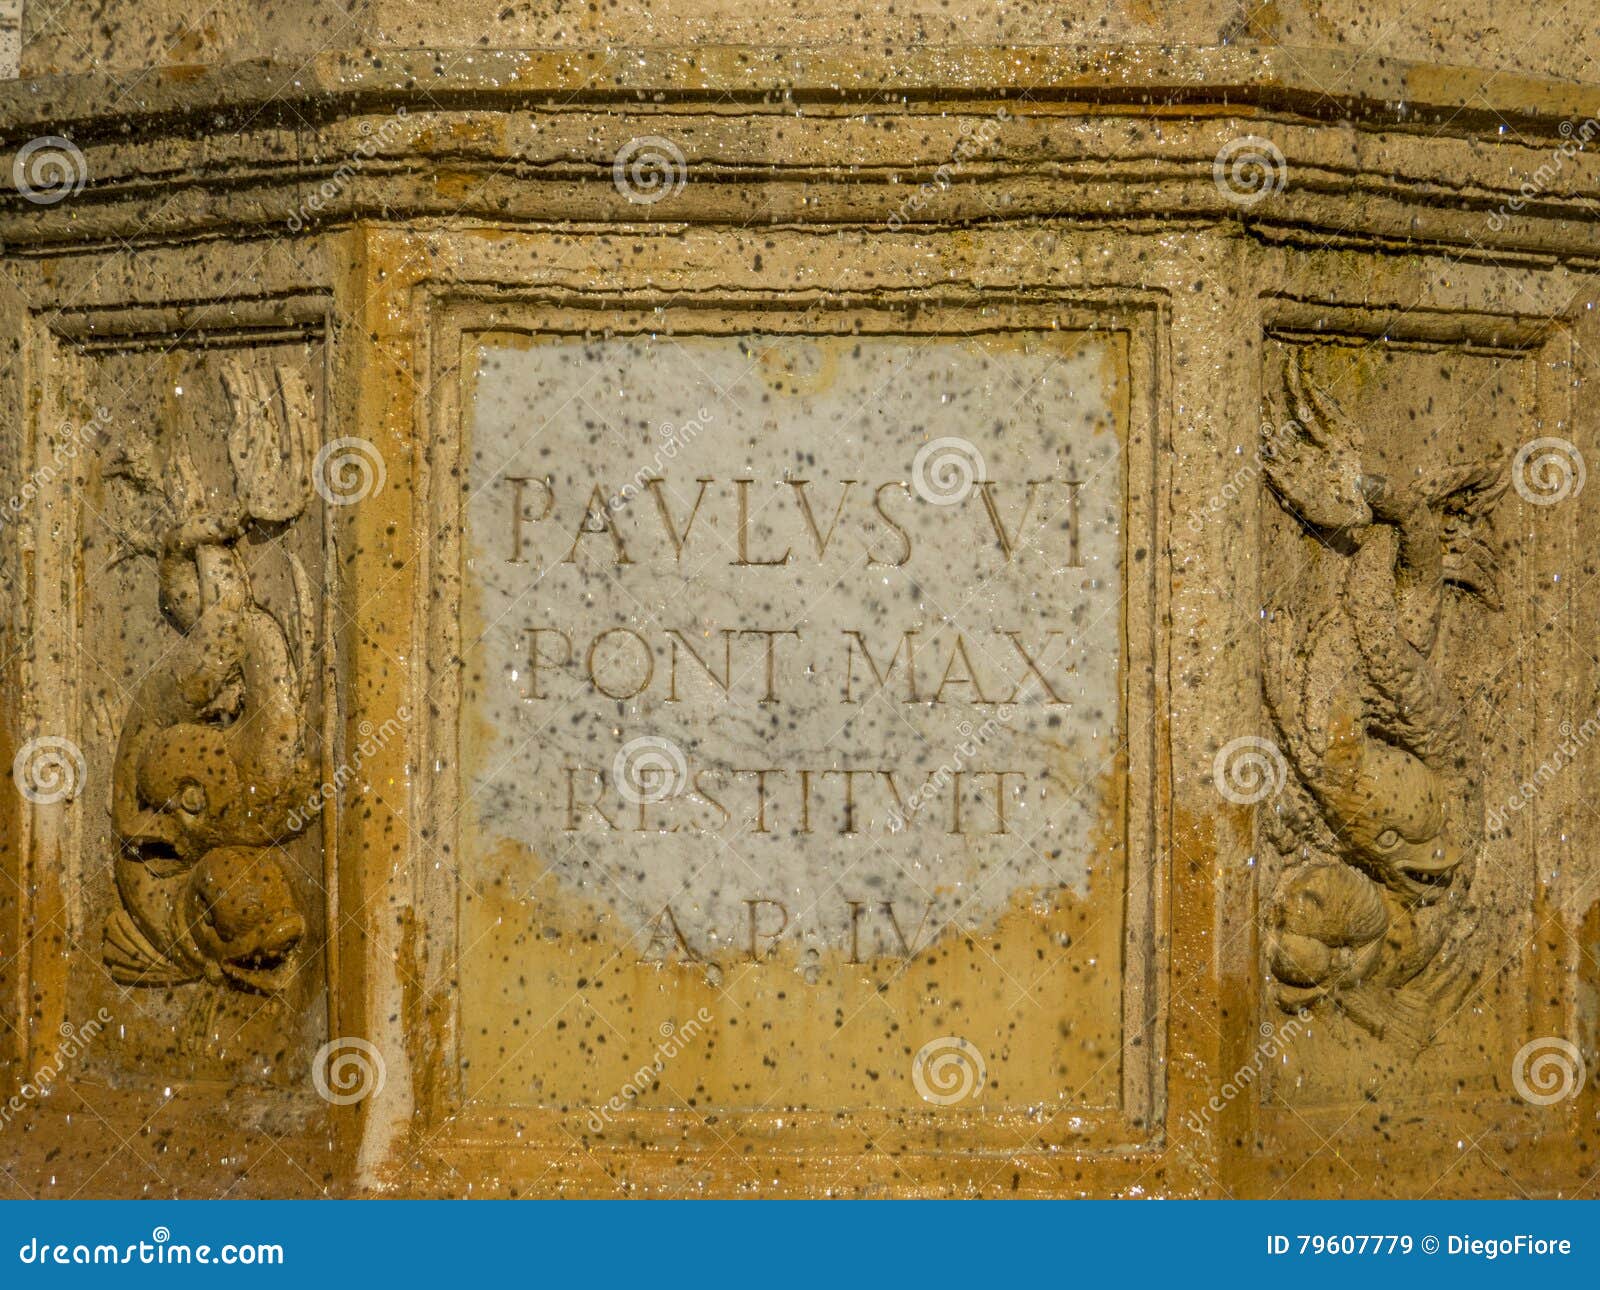 inscription dedicated to pope paul vi